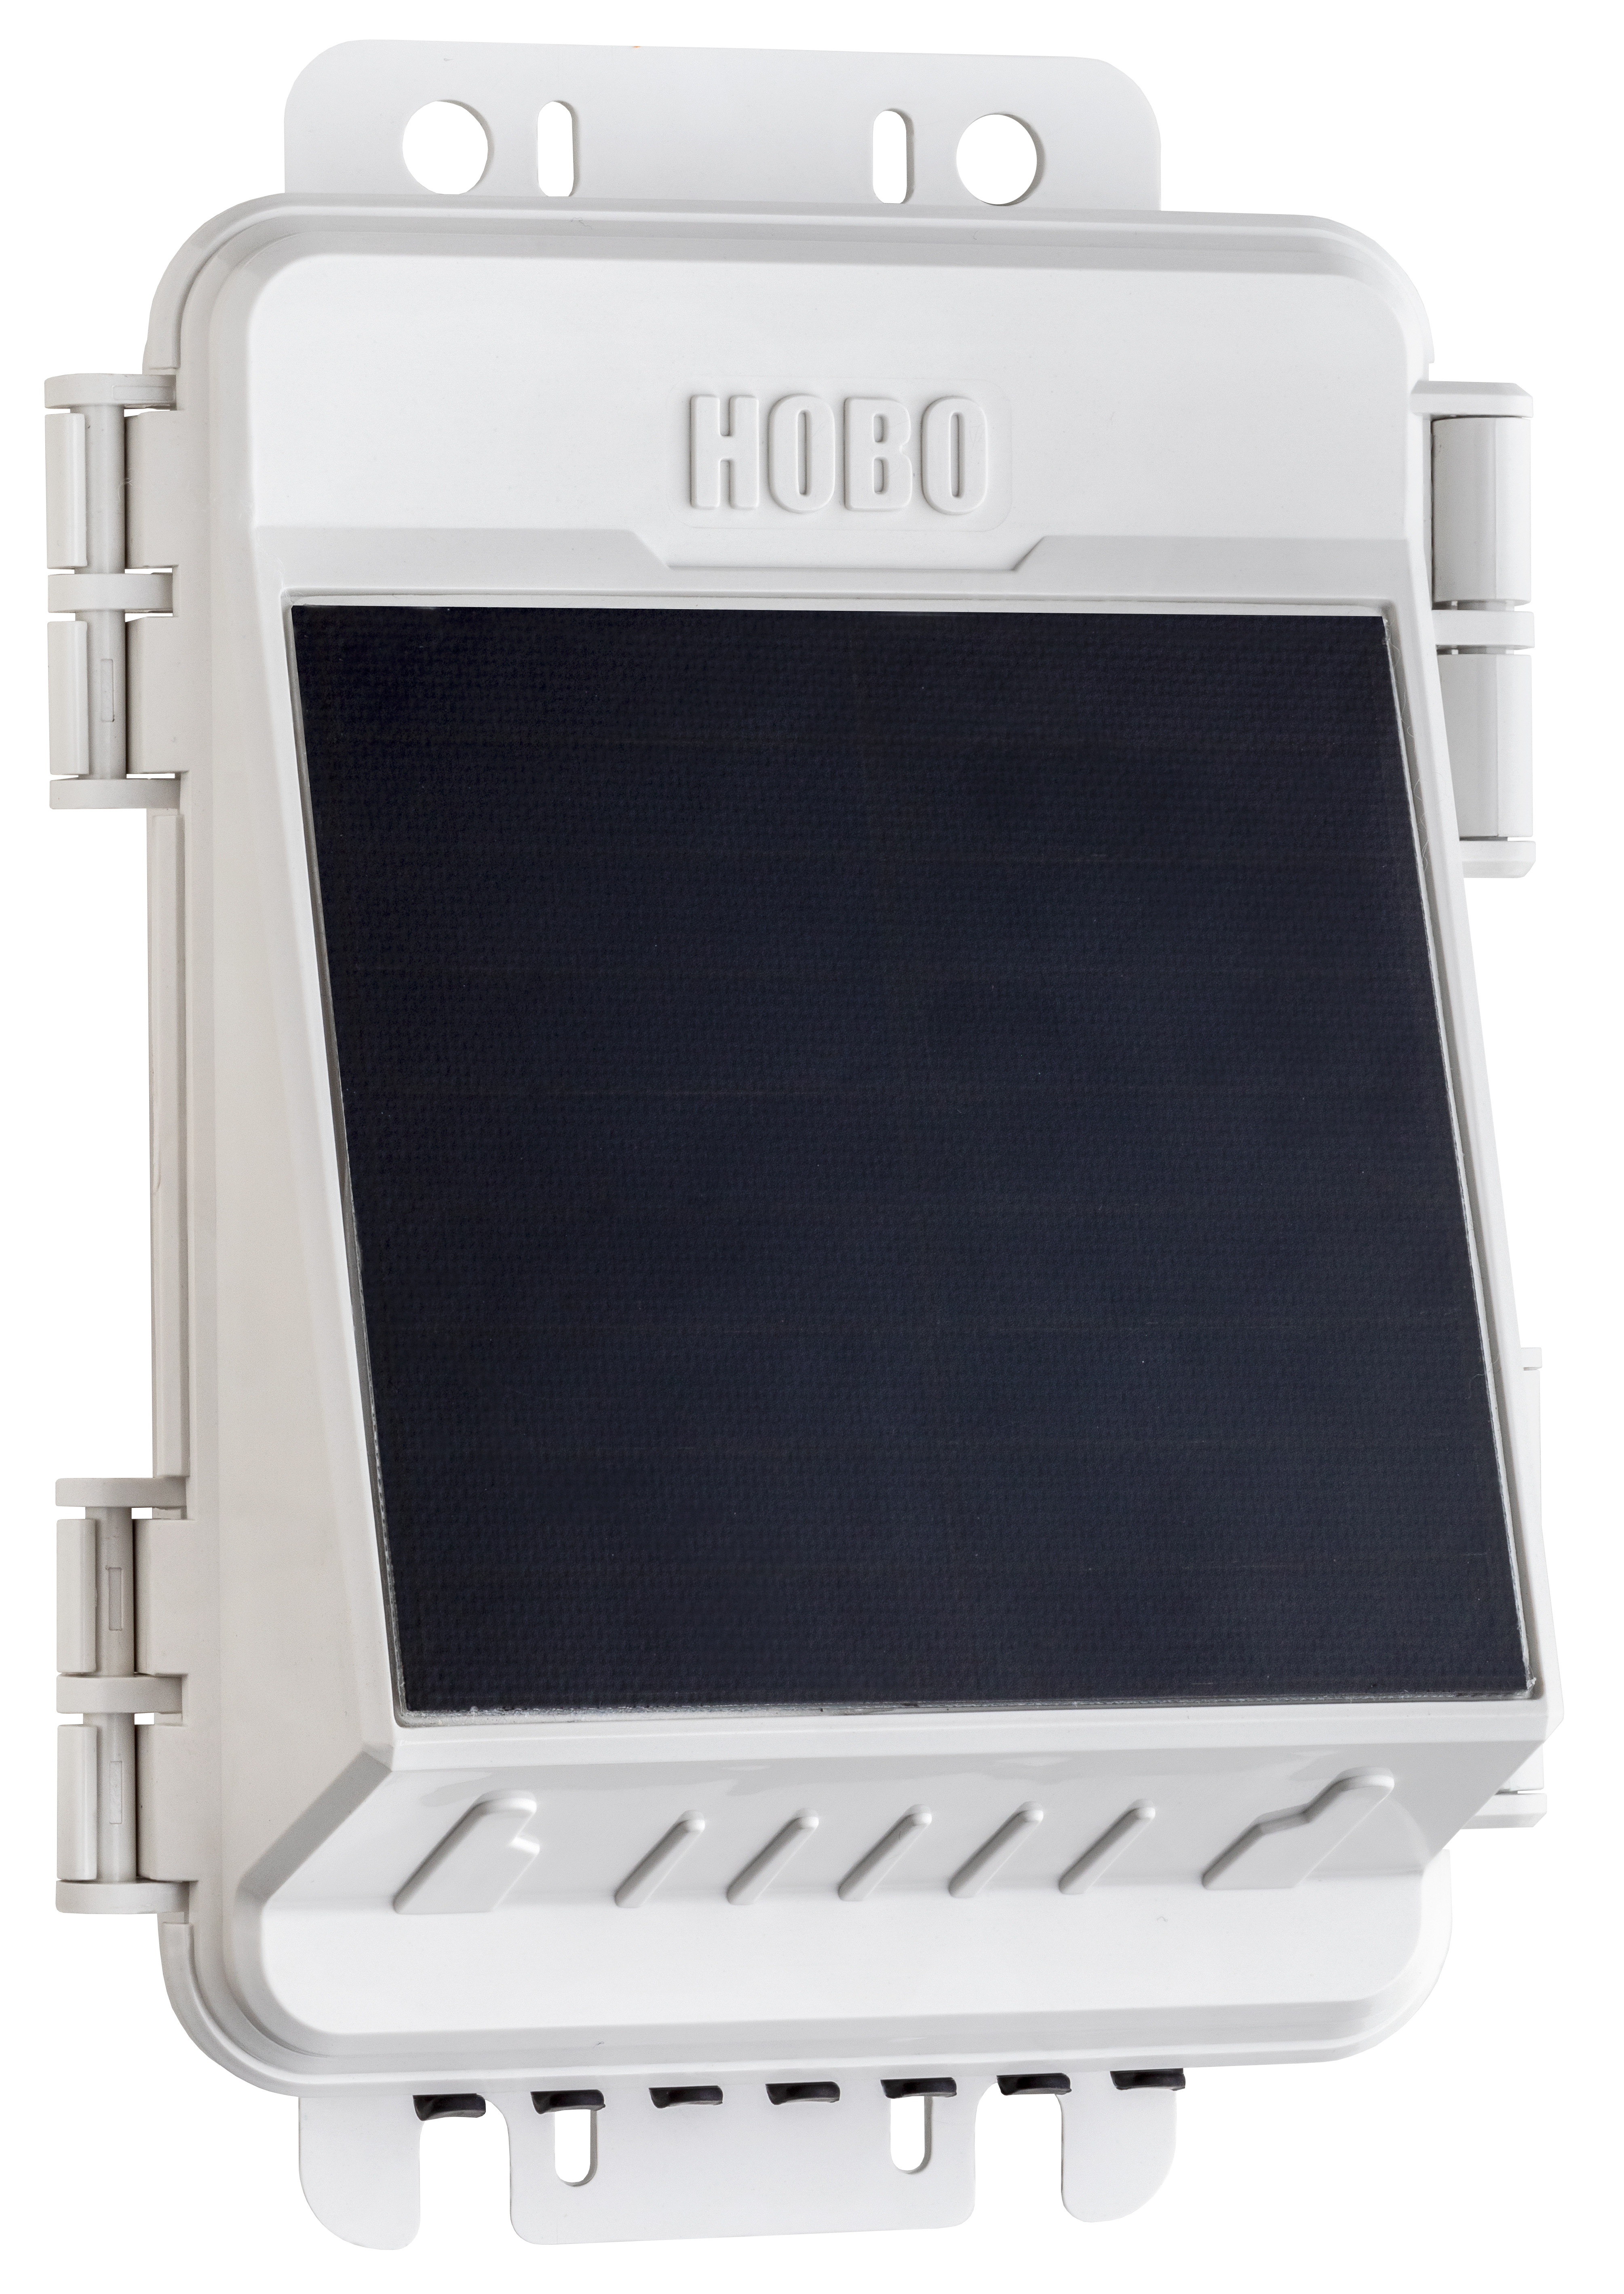 HOBO MicroRX Station (Batterie) RX2101